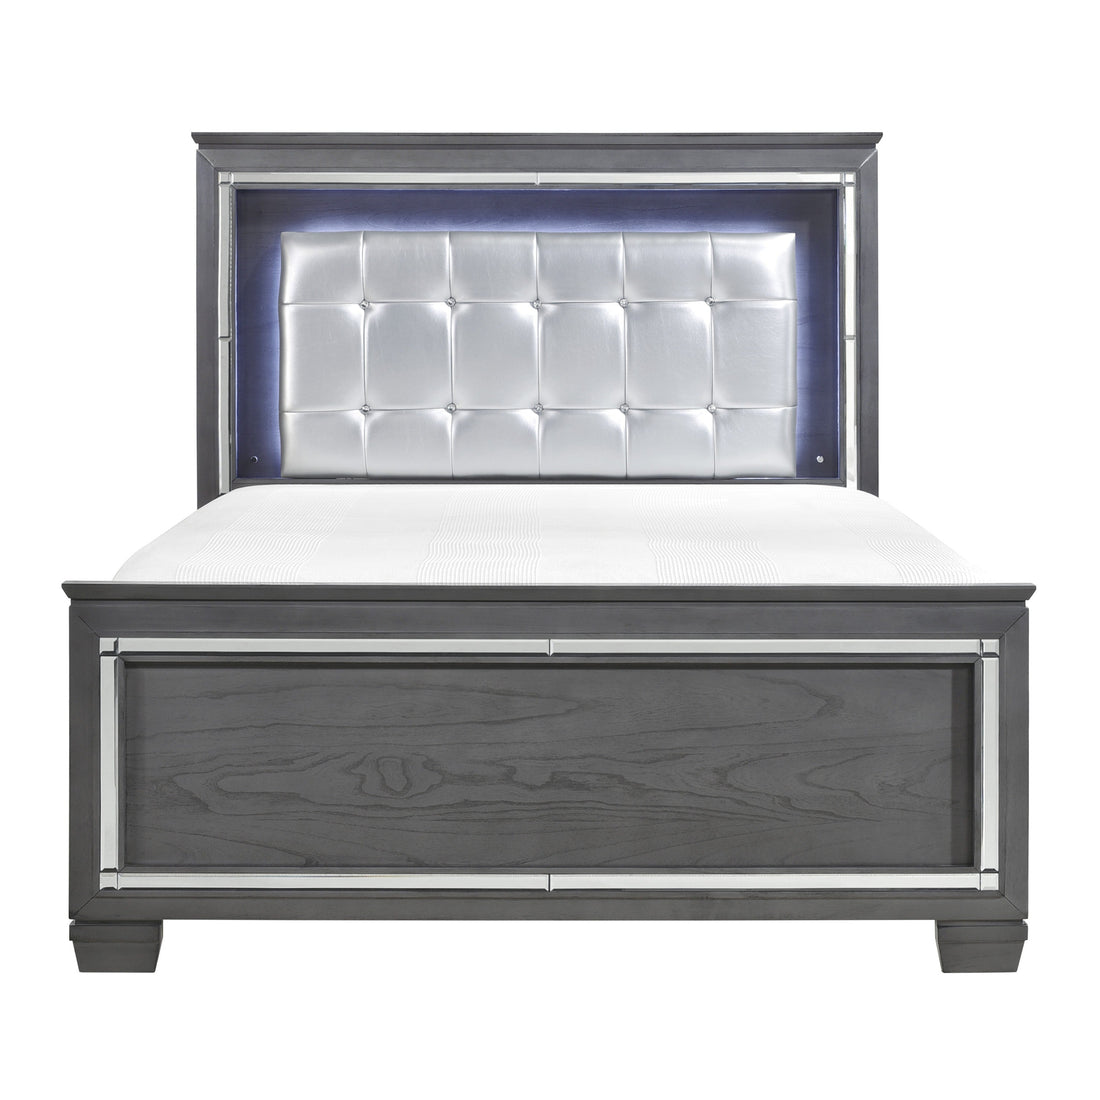 Allura Gray Full LED Upholstered Panel Bed - SET | 1916FGY-1 | 1916FGY-2 | 1916FGY-3 - Bien Home Furniture &amp; Electronics